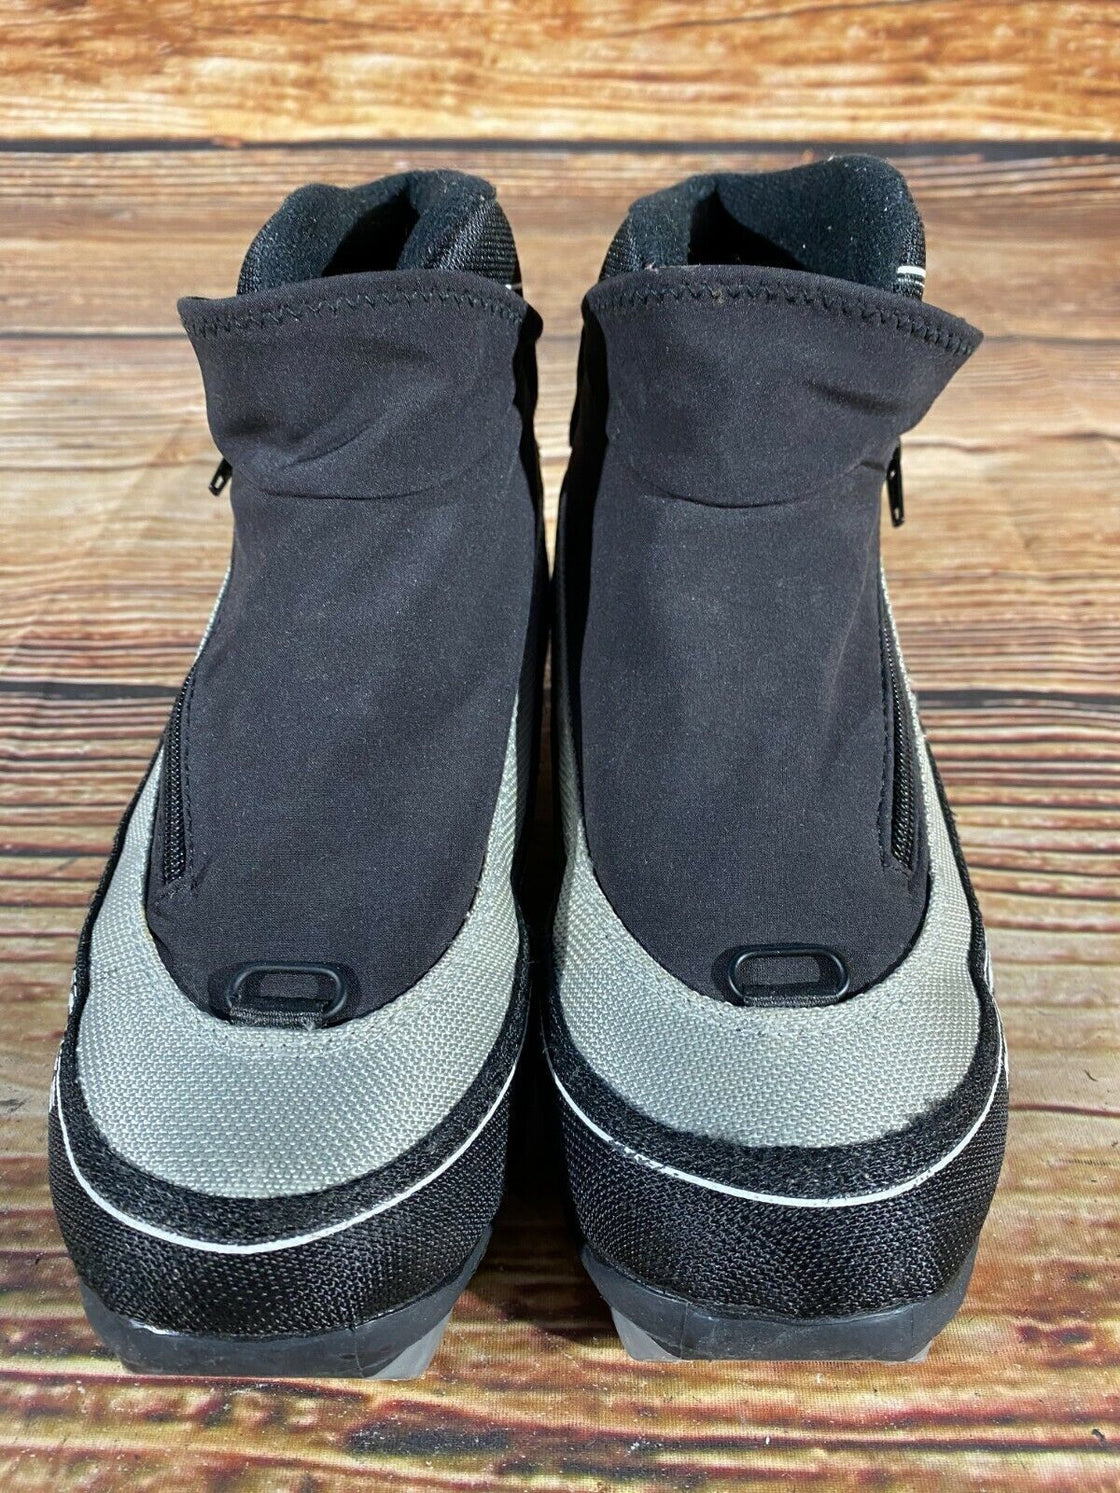 Madshus CT100 JR Kids Cross Country Ski Boots Size EU33 US1.5 NNN bindings